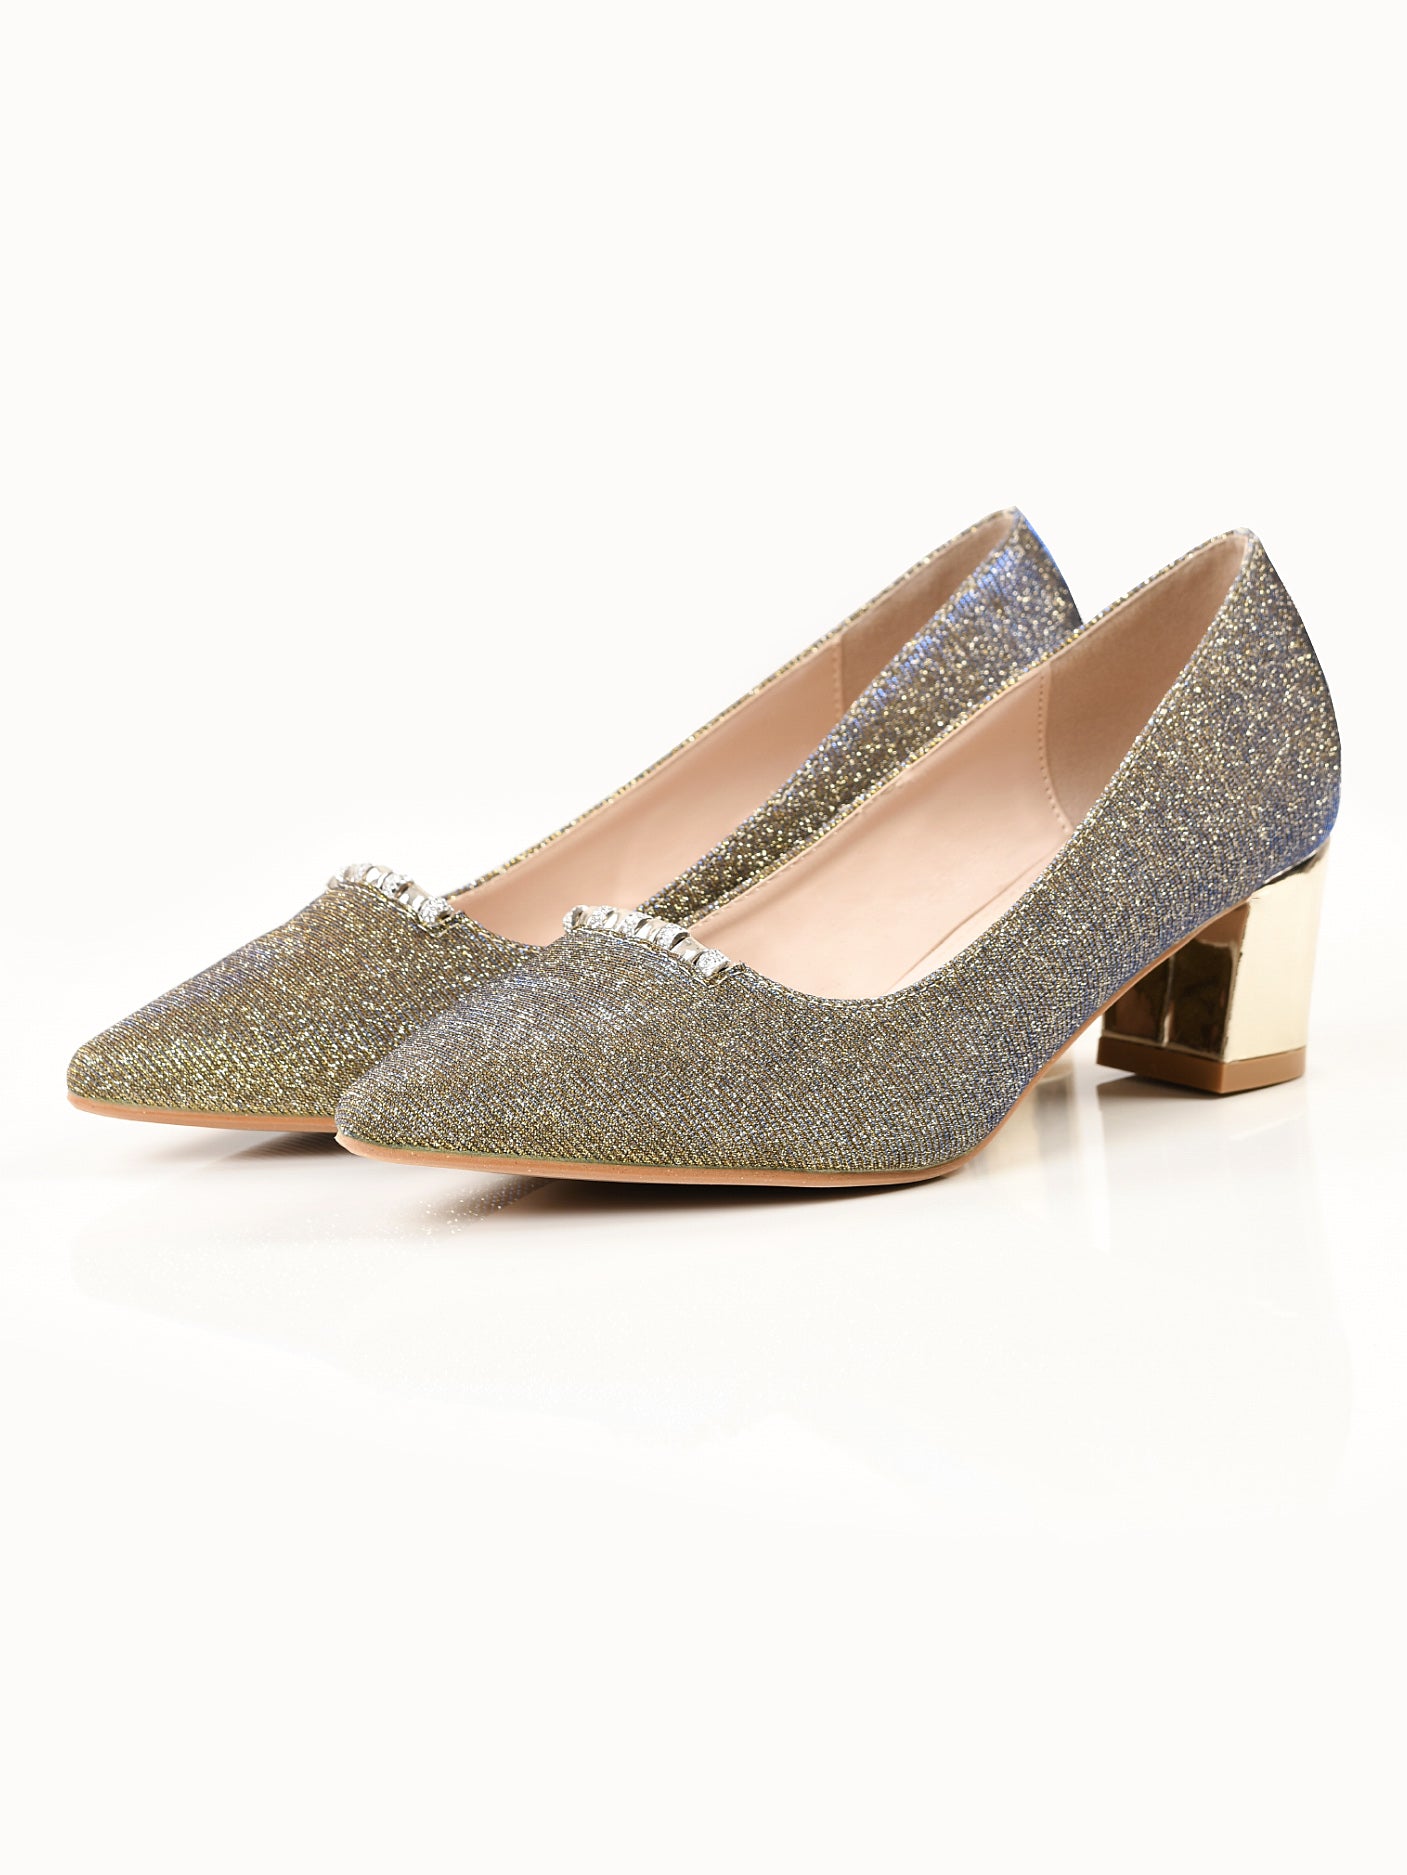 Glittery Heels - Gold